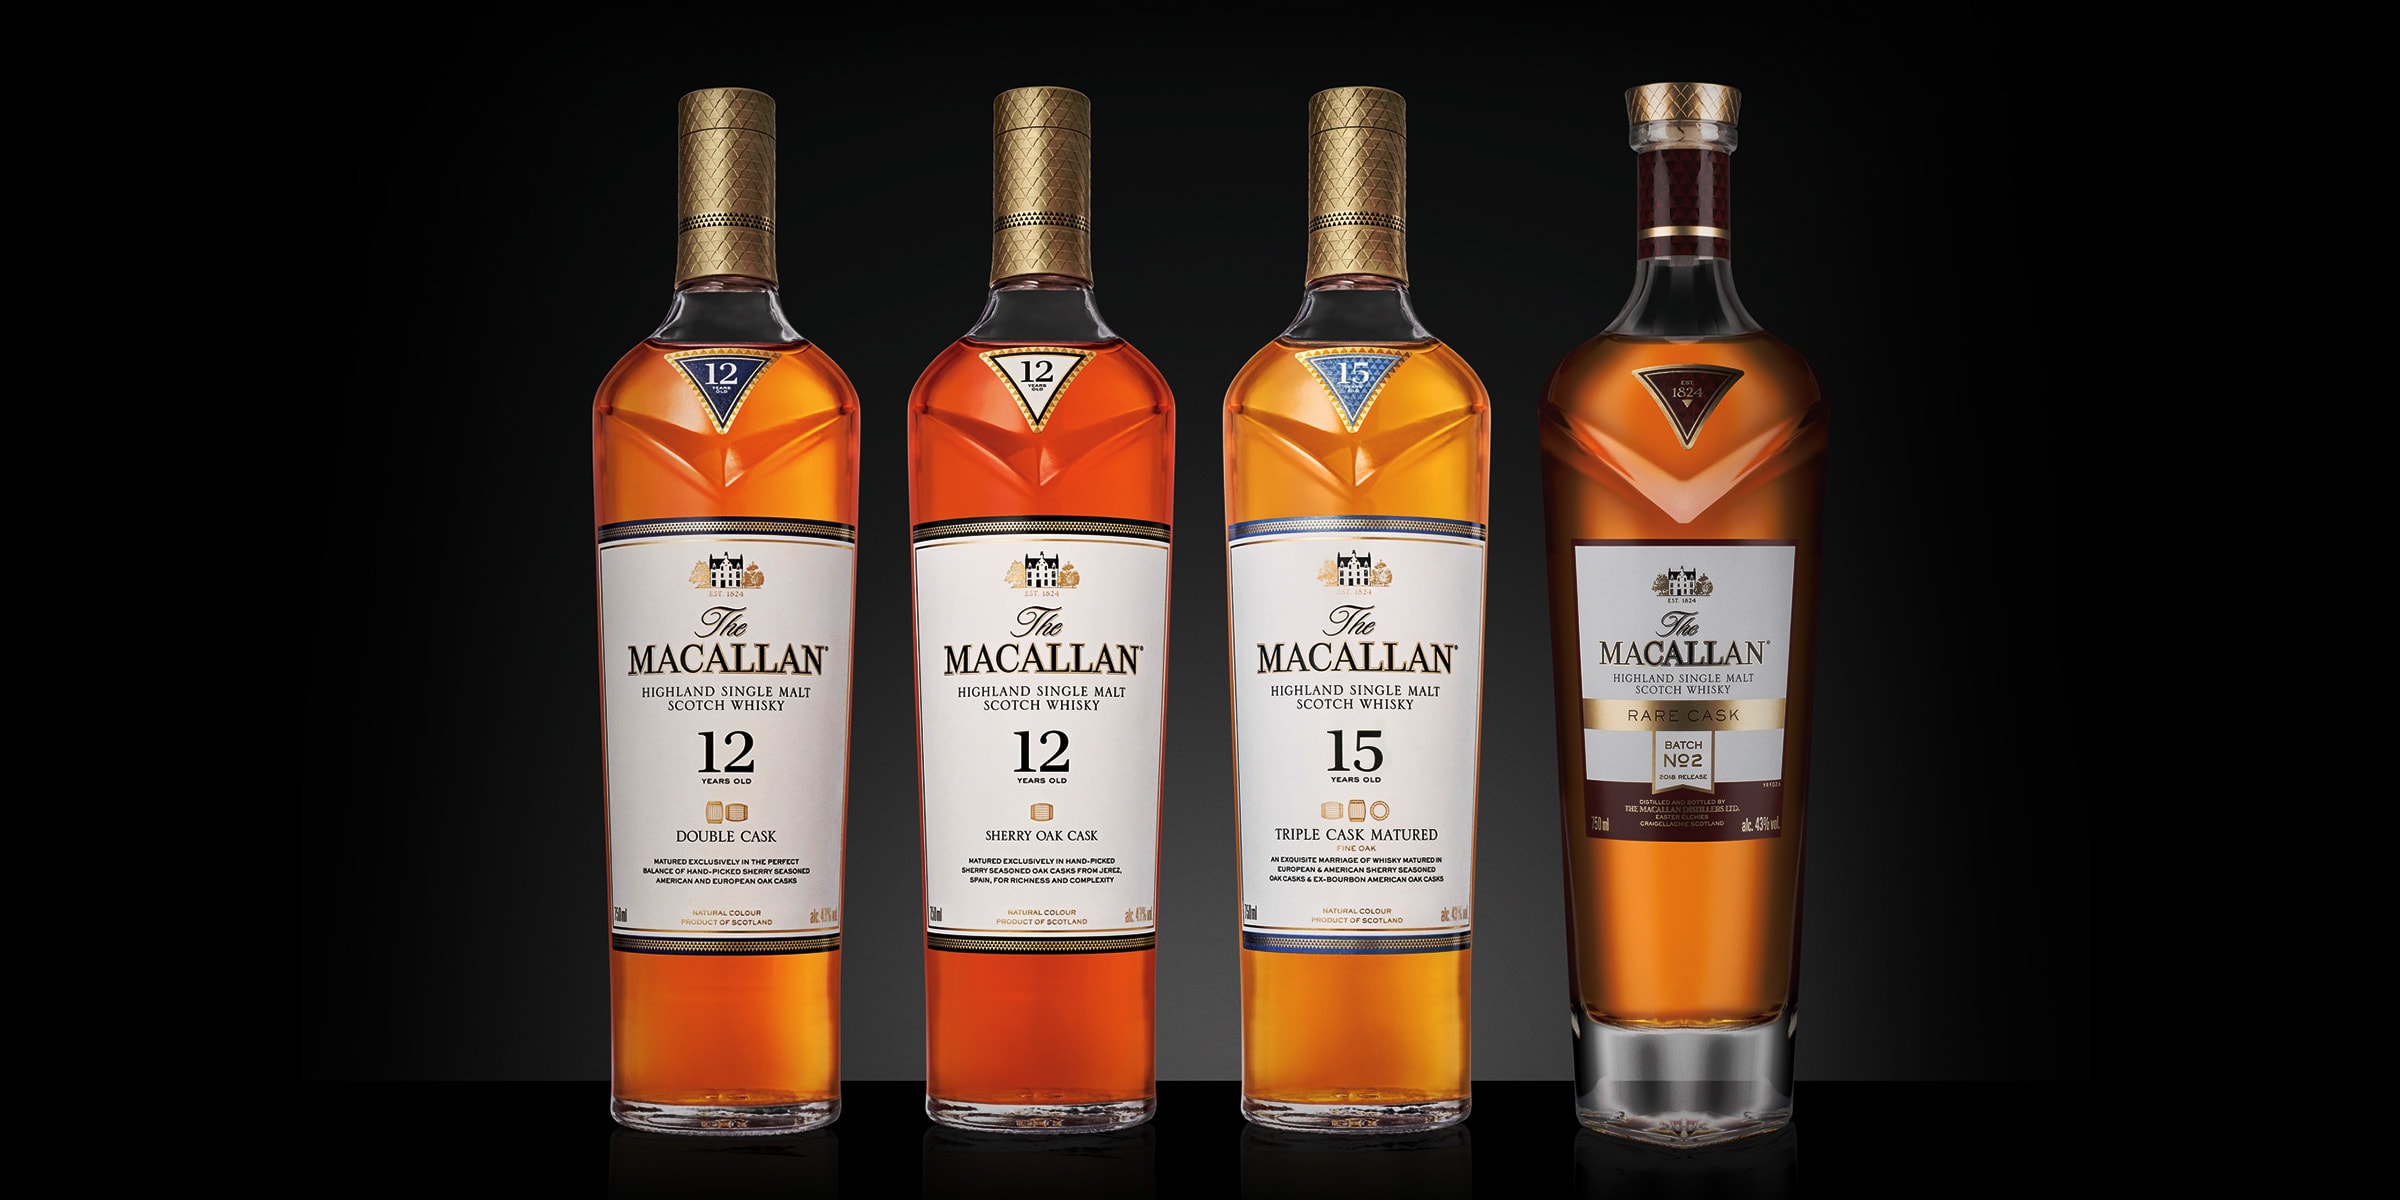 macallan-scotch-whisky-bottle-price-size-luxe-digital@2x-150x150.jpeg